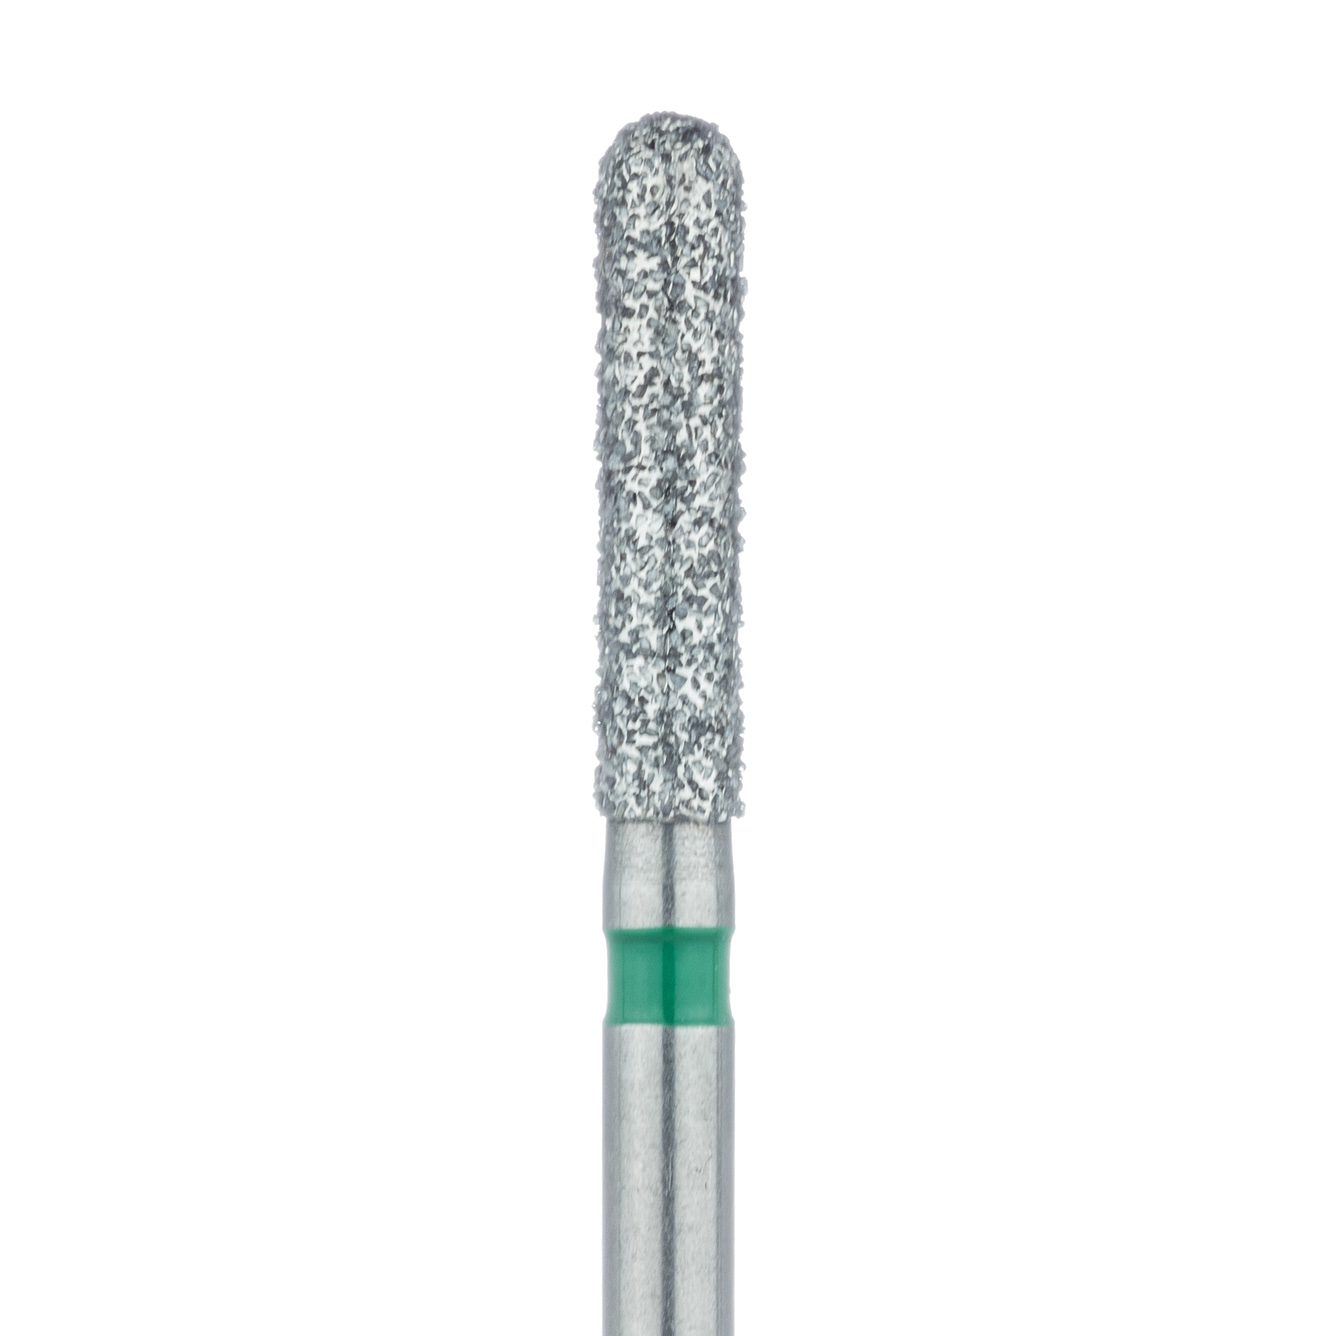 881G-018-FG Round End Cylinder Diamond Bur, 1.8mm Ø, Coarse, FG